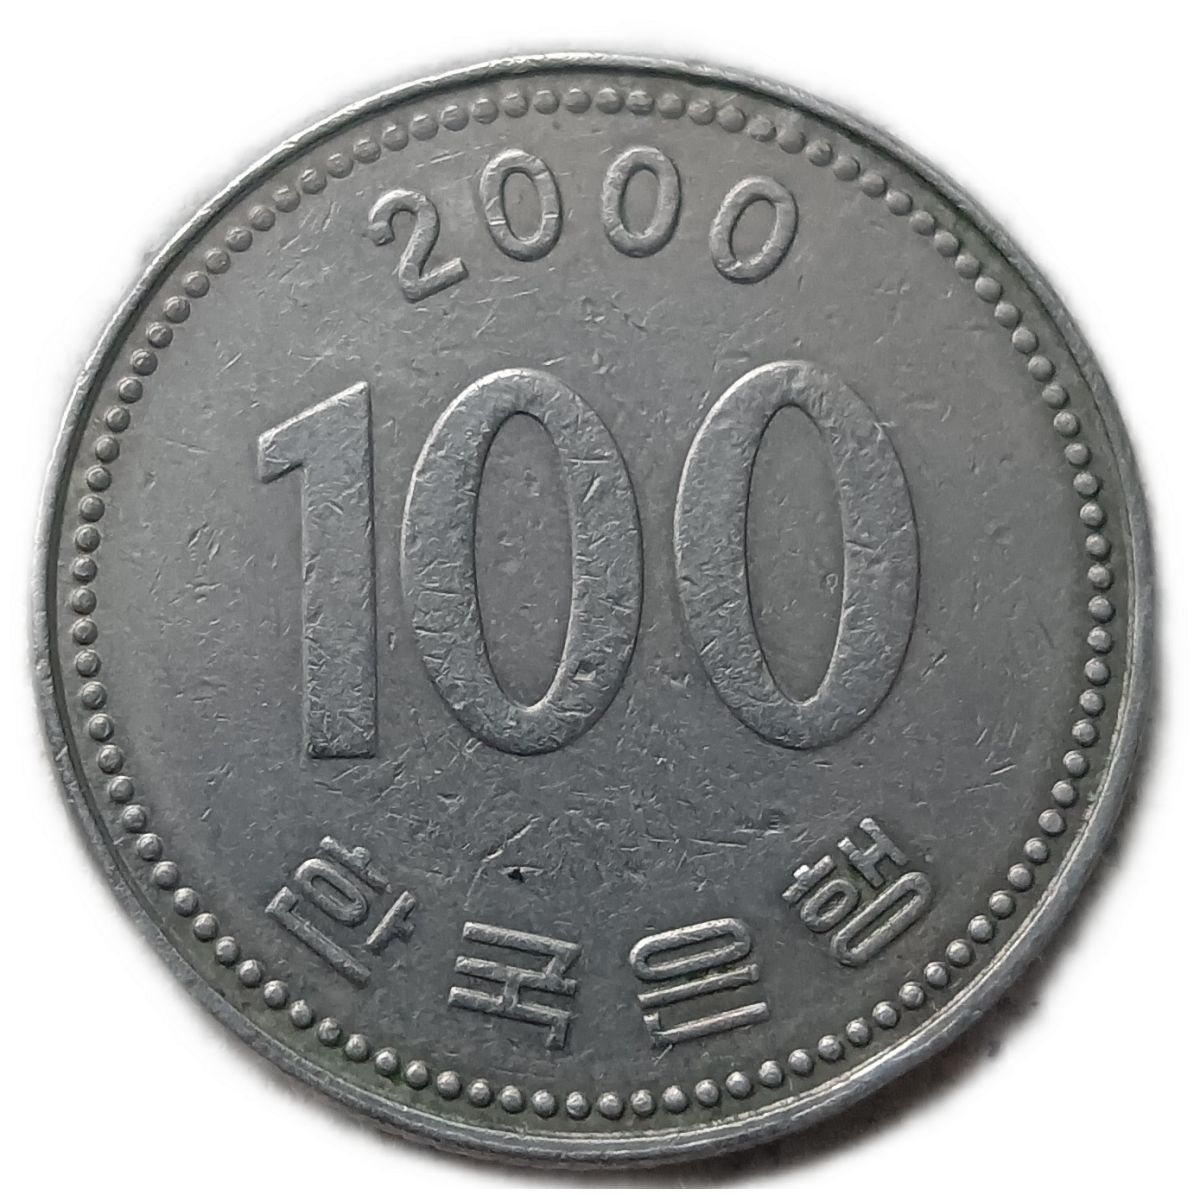 100 вон это сколько. Ли Сун син 100 вон. Корейская монета номинал 100 вон. Корейская монета 1 вон. Южная Корея 100 вон 1983.